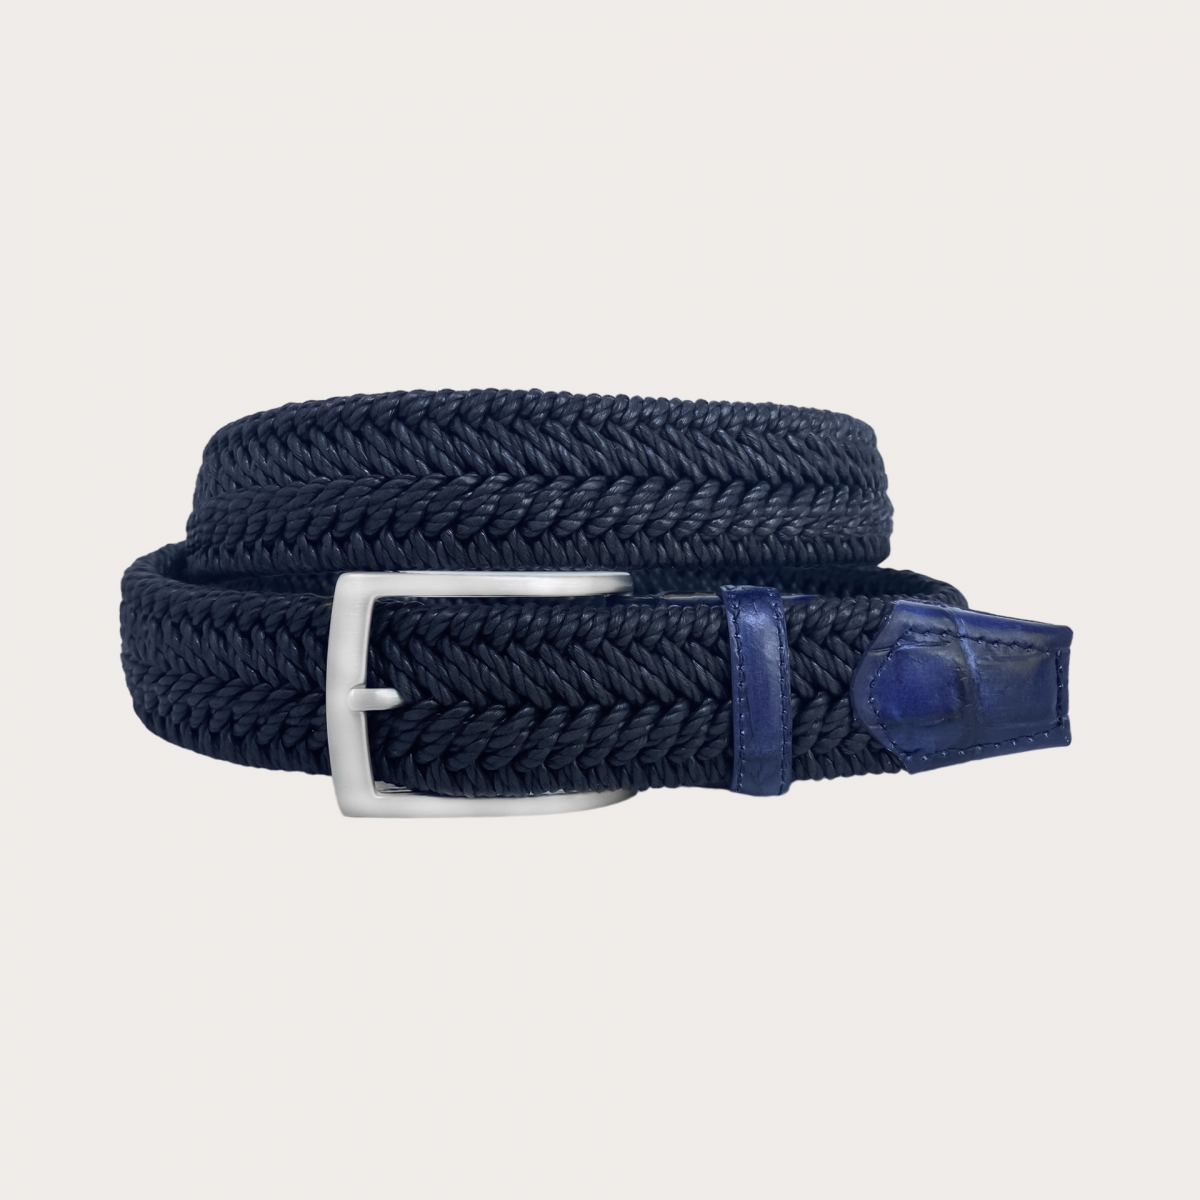 BRUCLE Cintura elastica intrecciata blu navy con pelle stampa coccodrillo